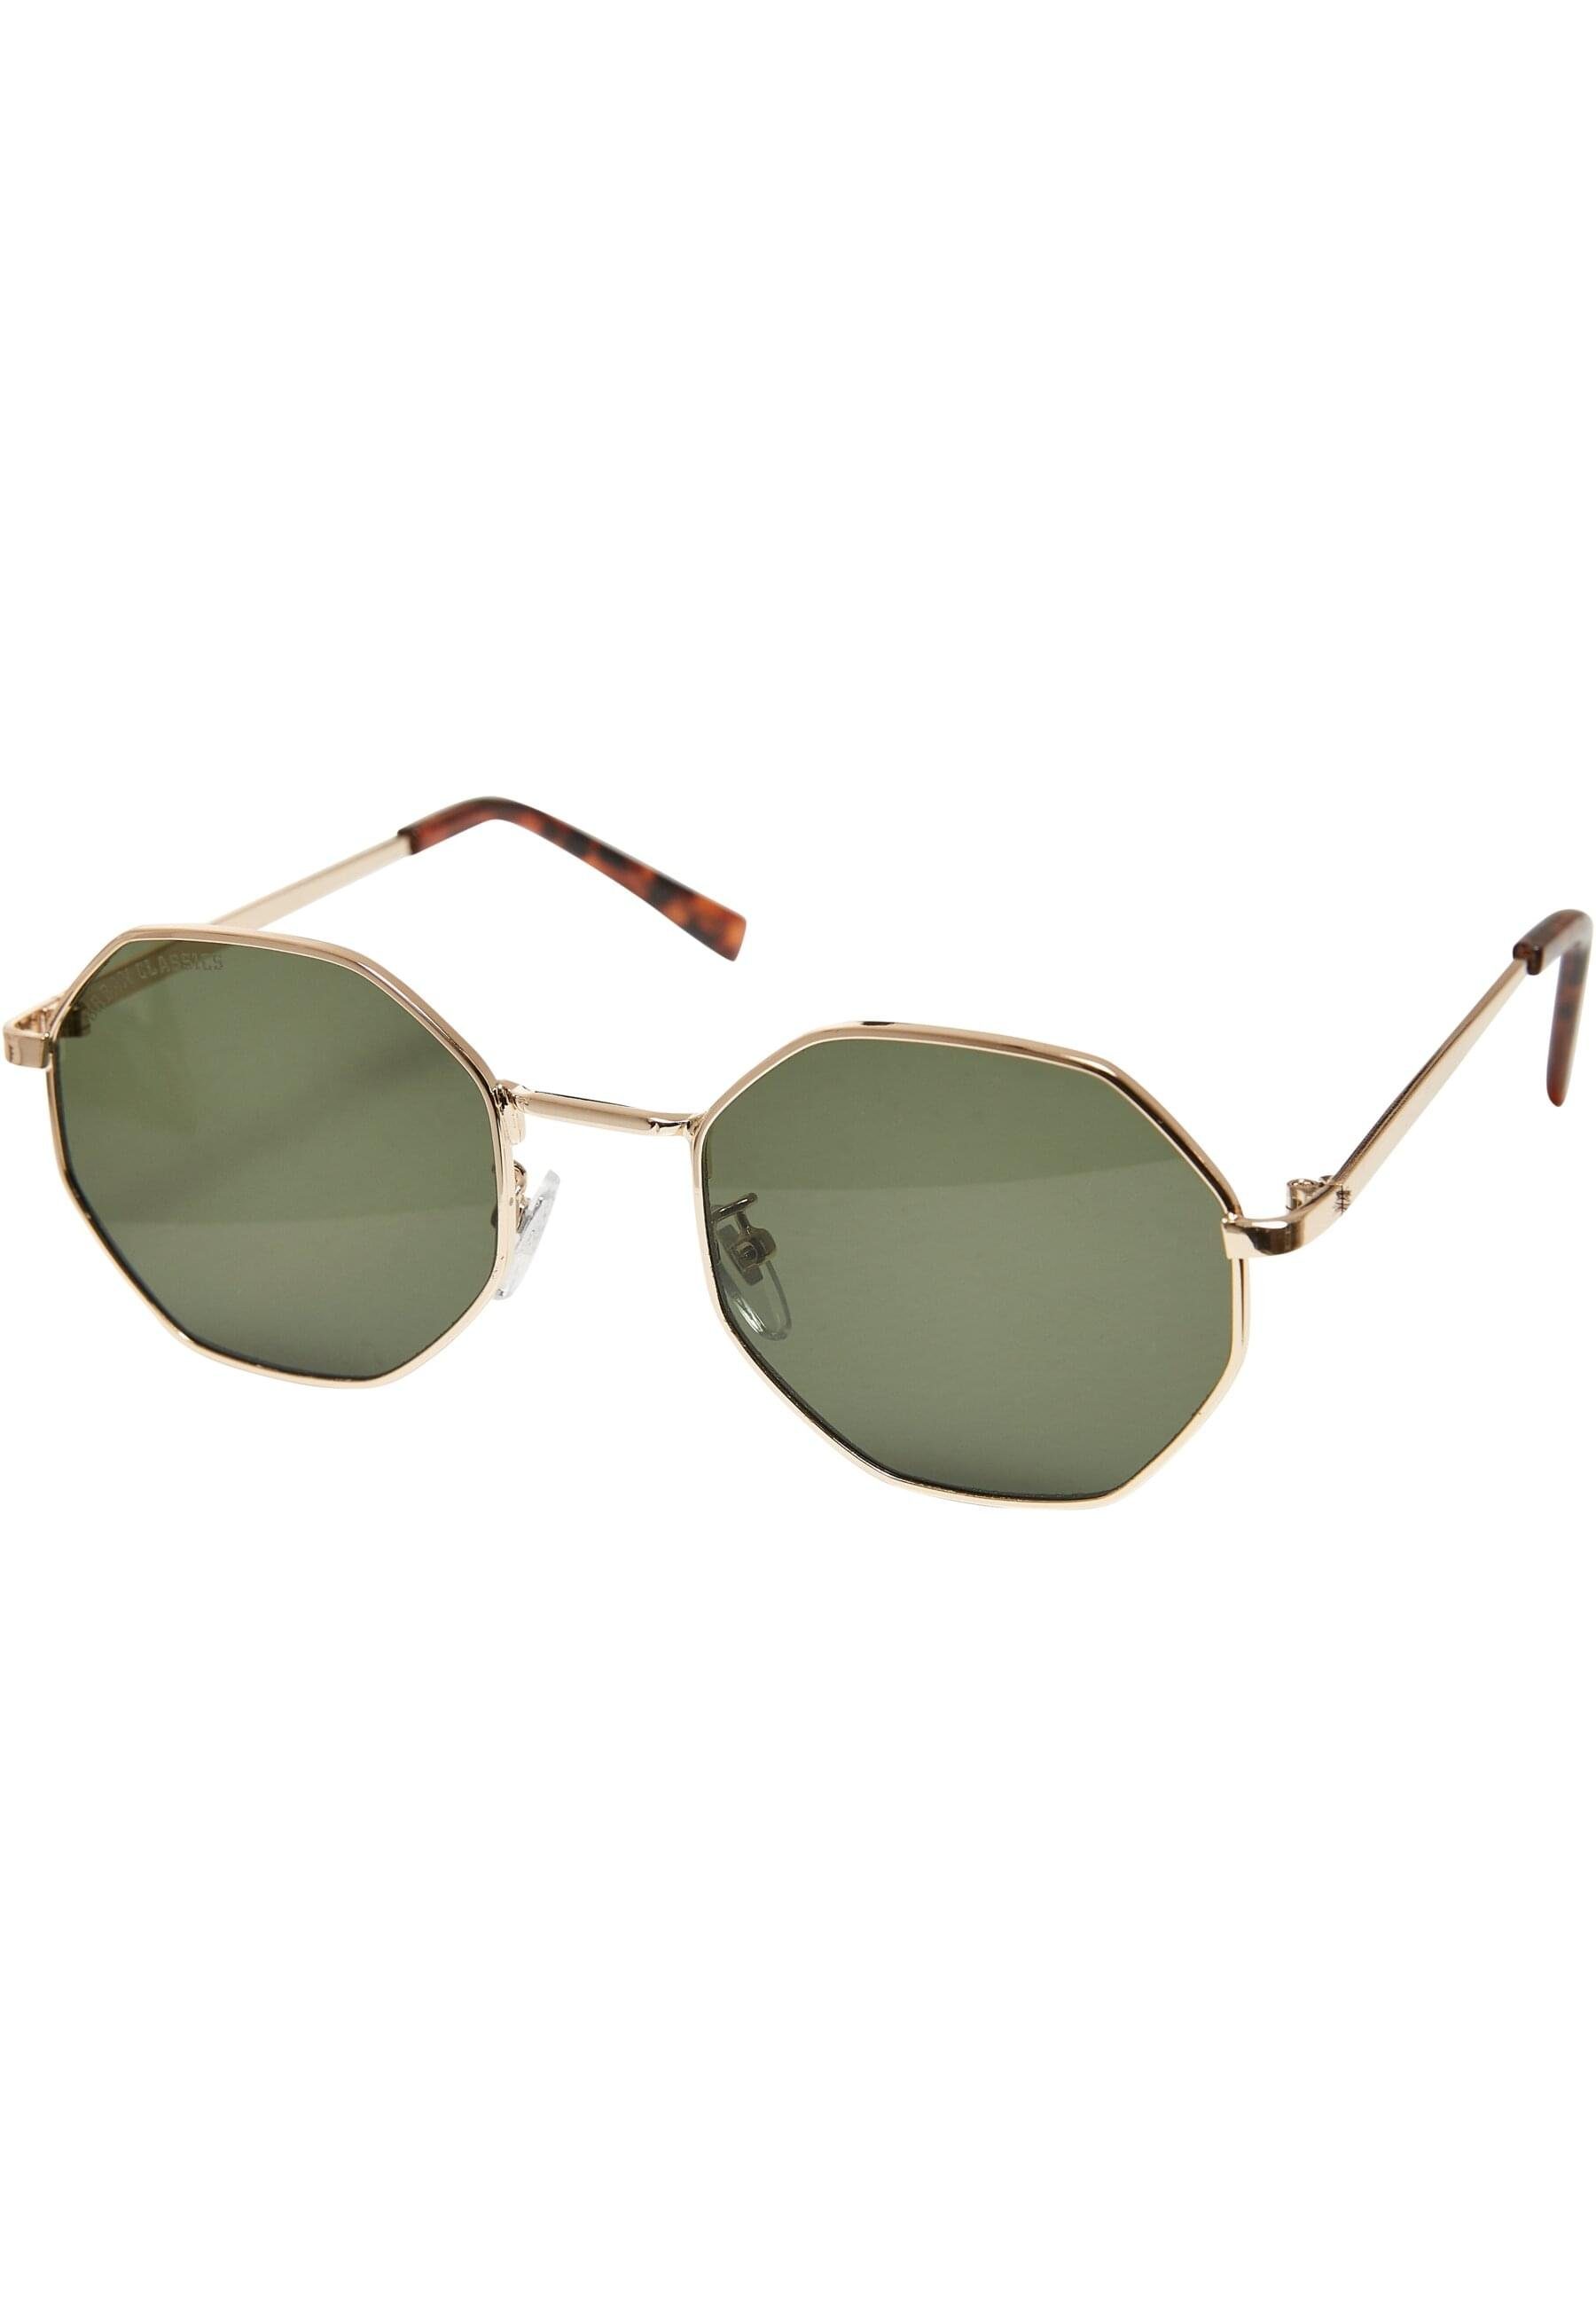 Sunglasses Sonnenbrille bottlegreen/gold CLASSICS URBAN Toronto Unisex